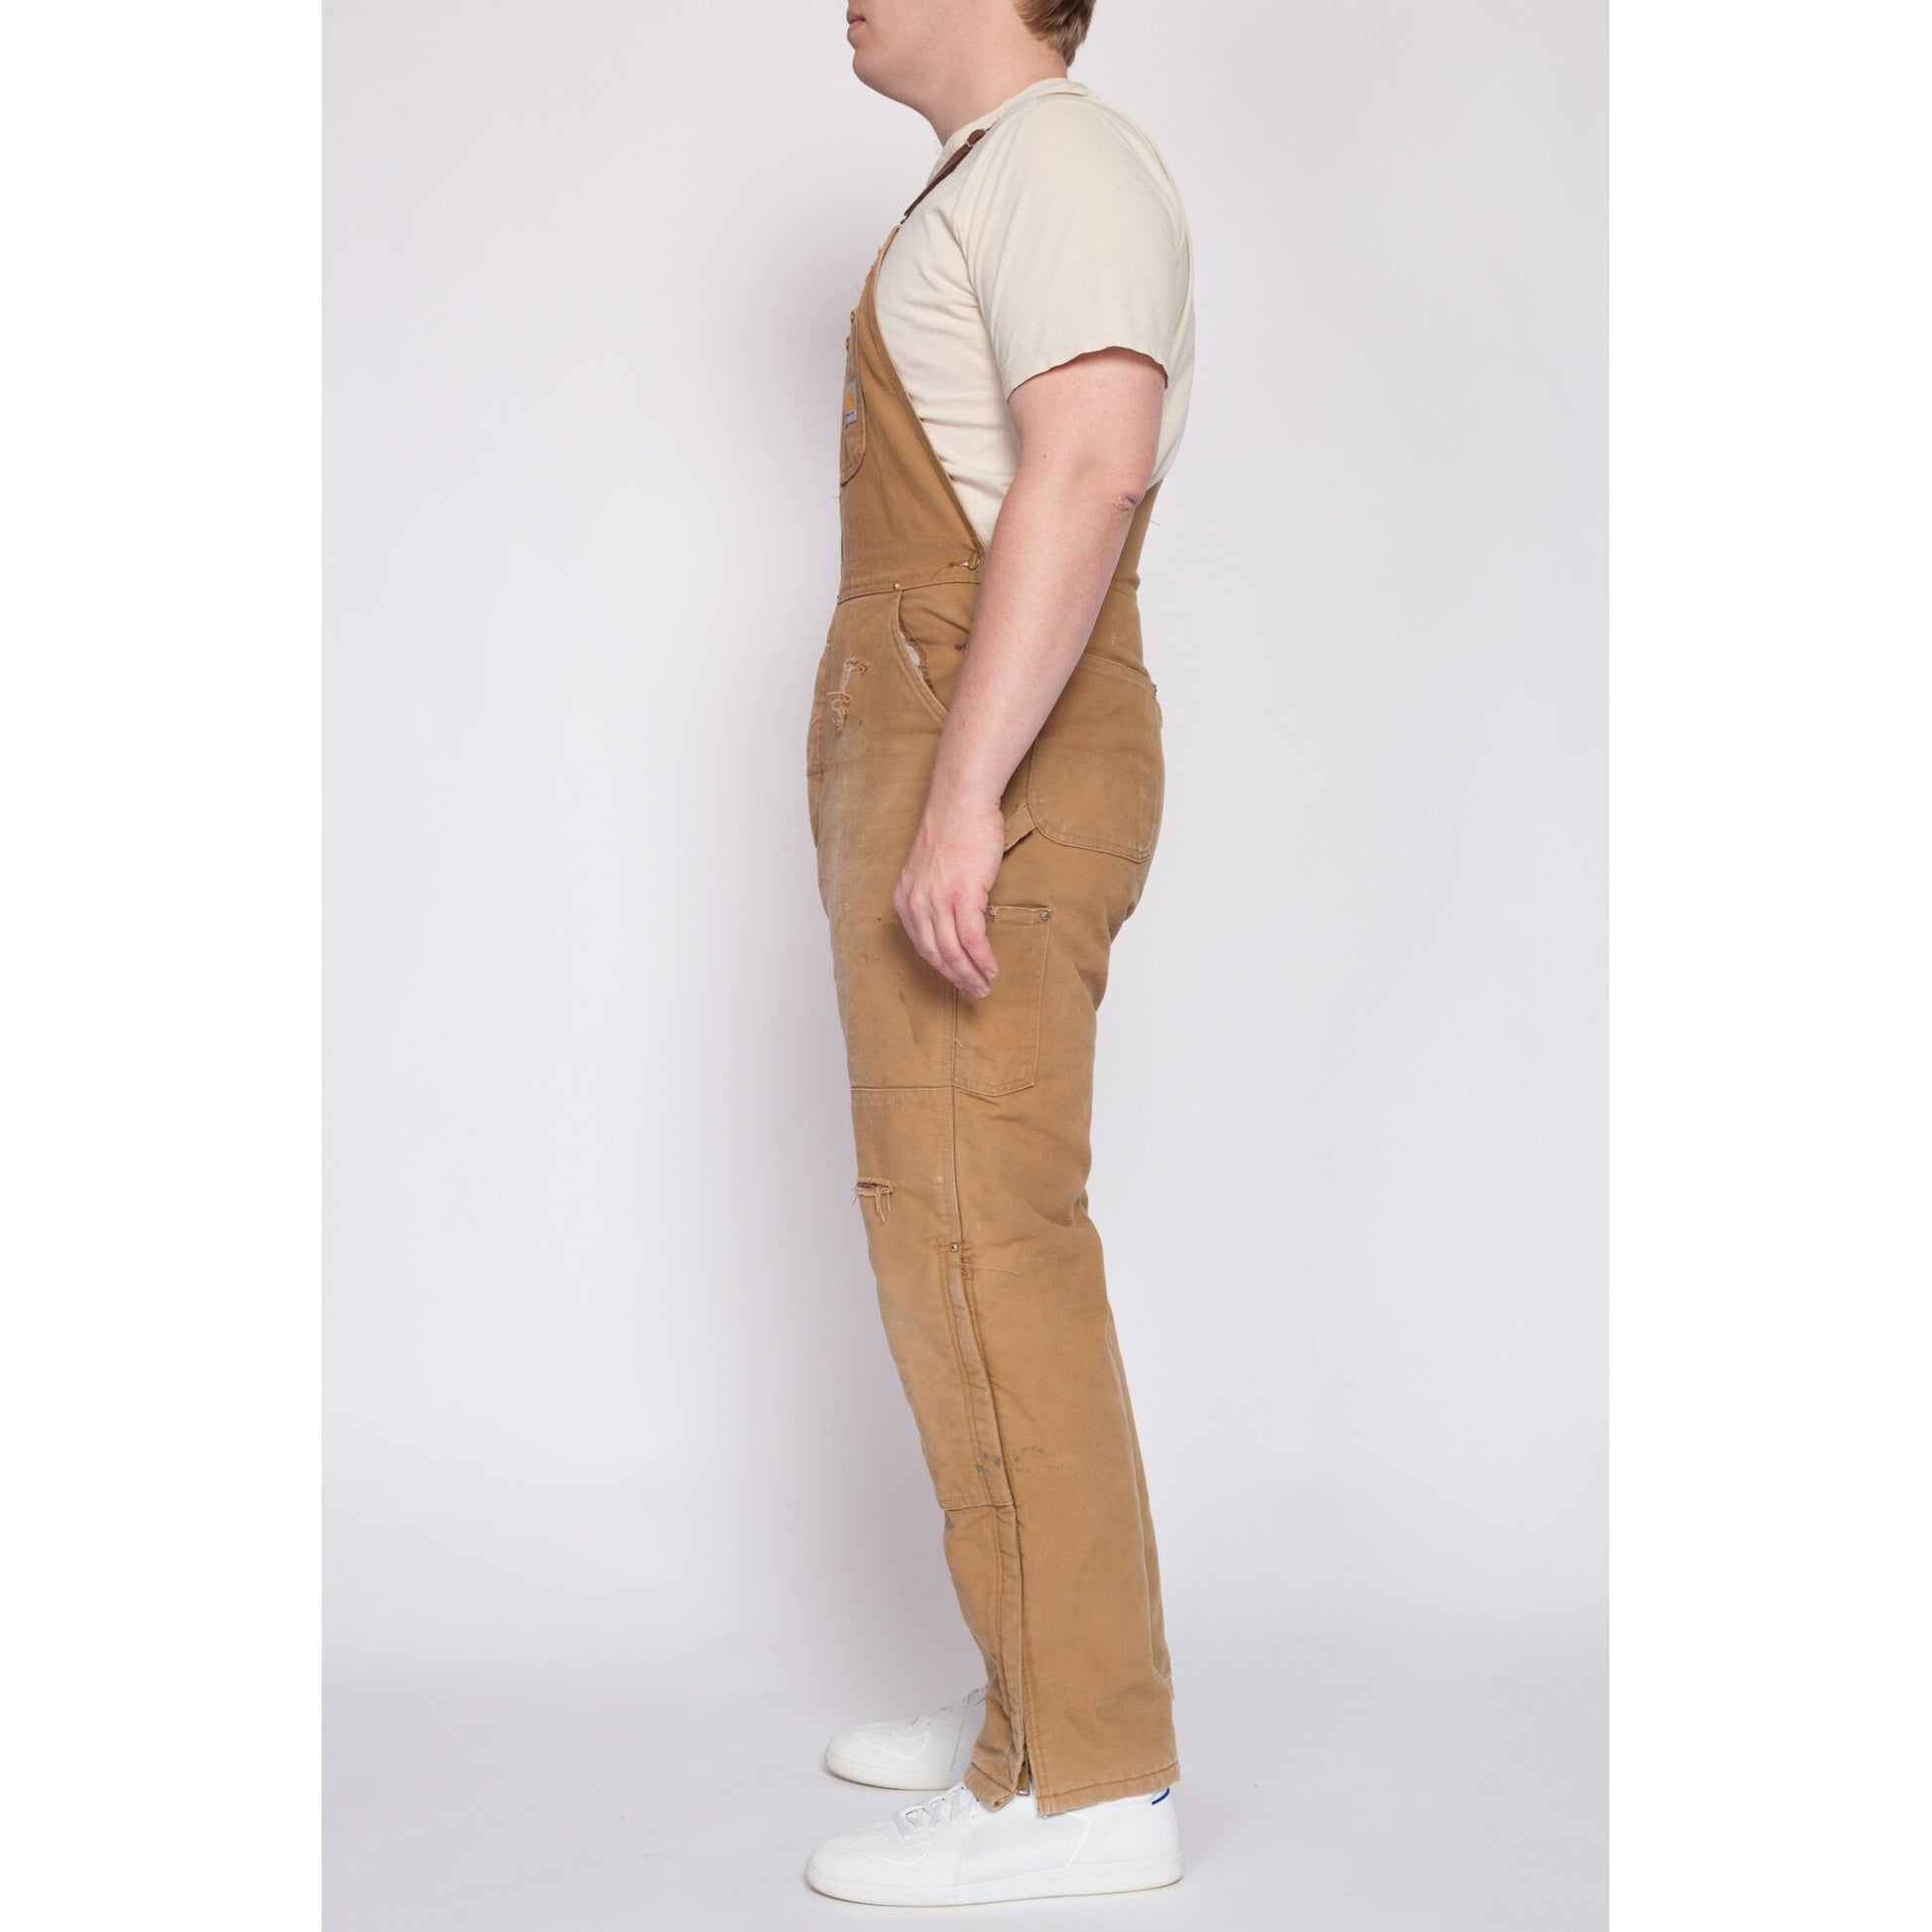 Carhartt Men's Carhartt Brown Duck Work Pants (38 x 34)